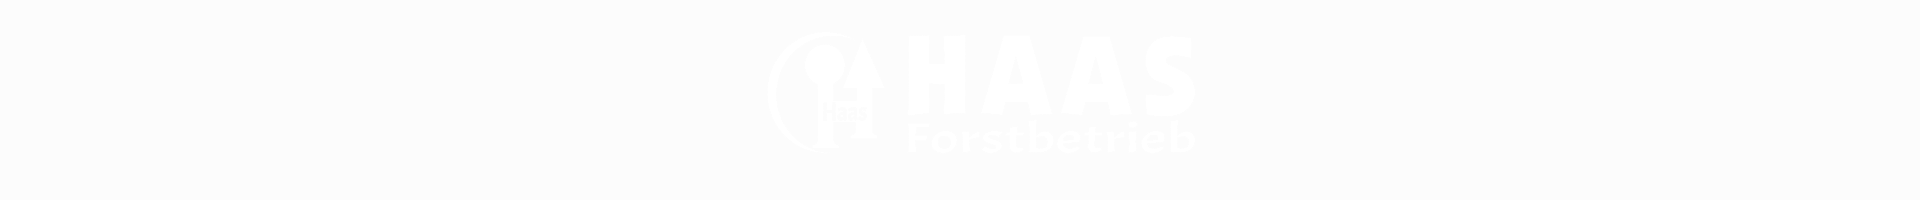 haas-forstbetrieb--logo2Width